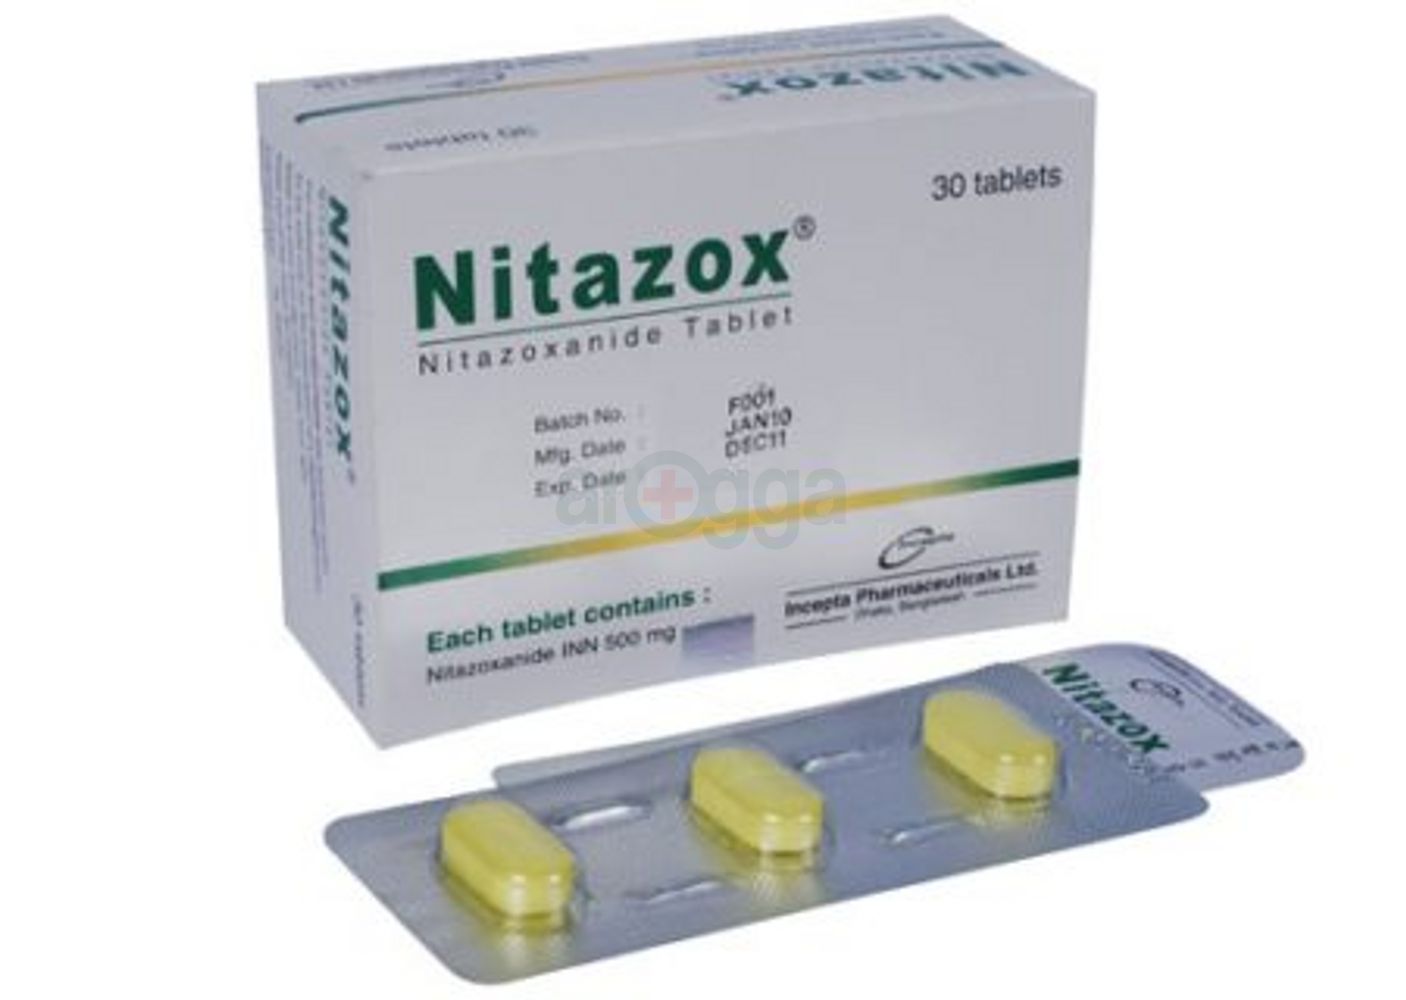 Nitazox